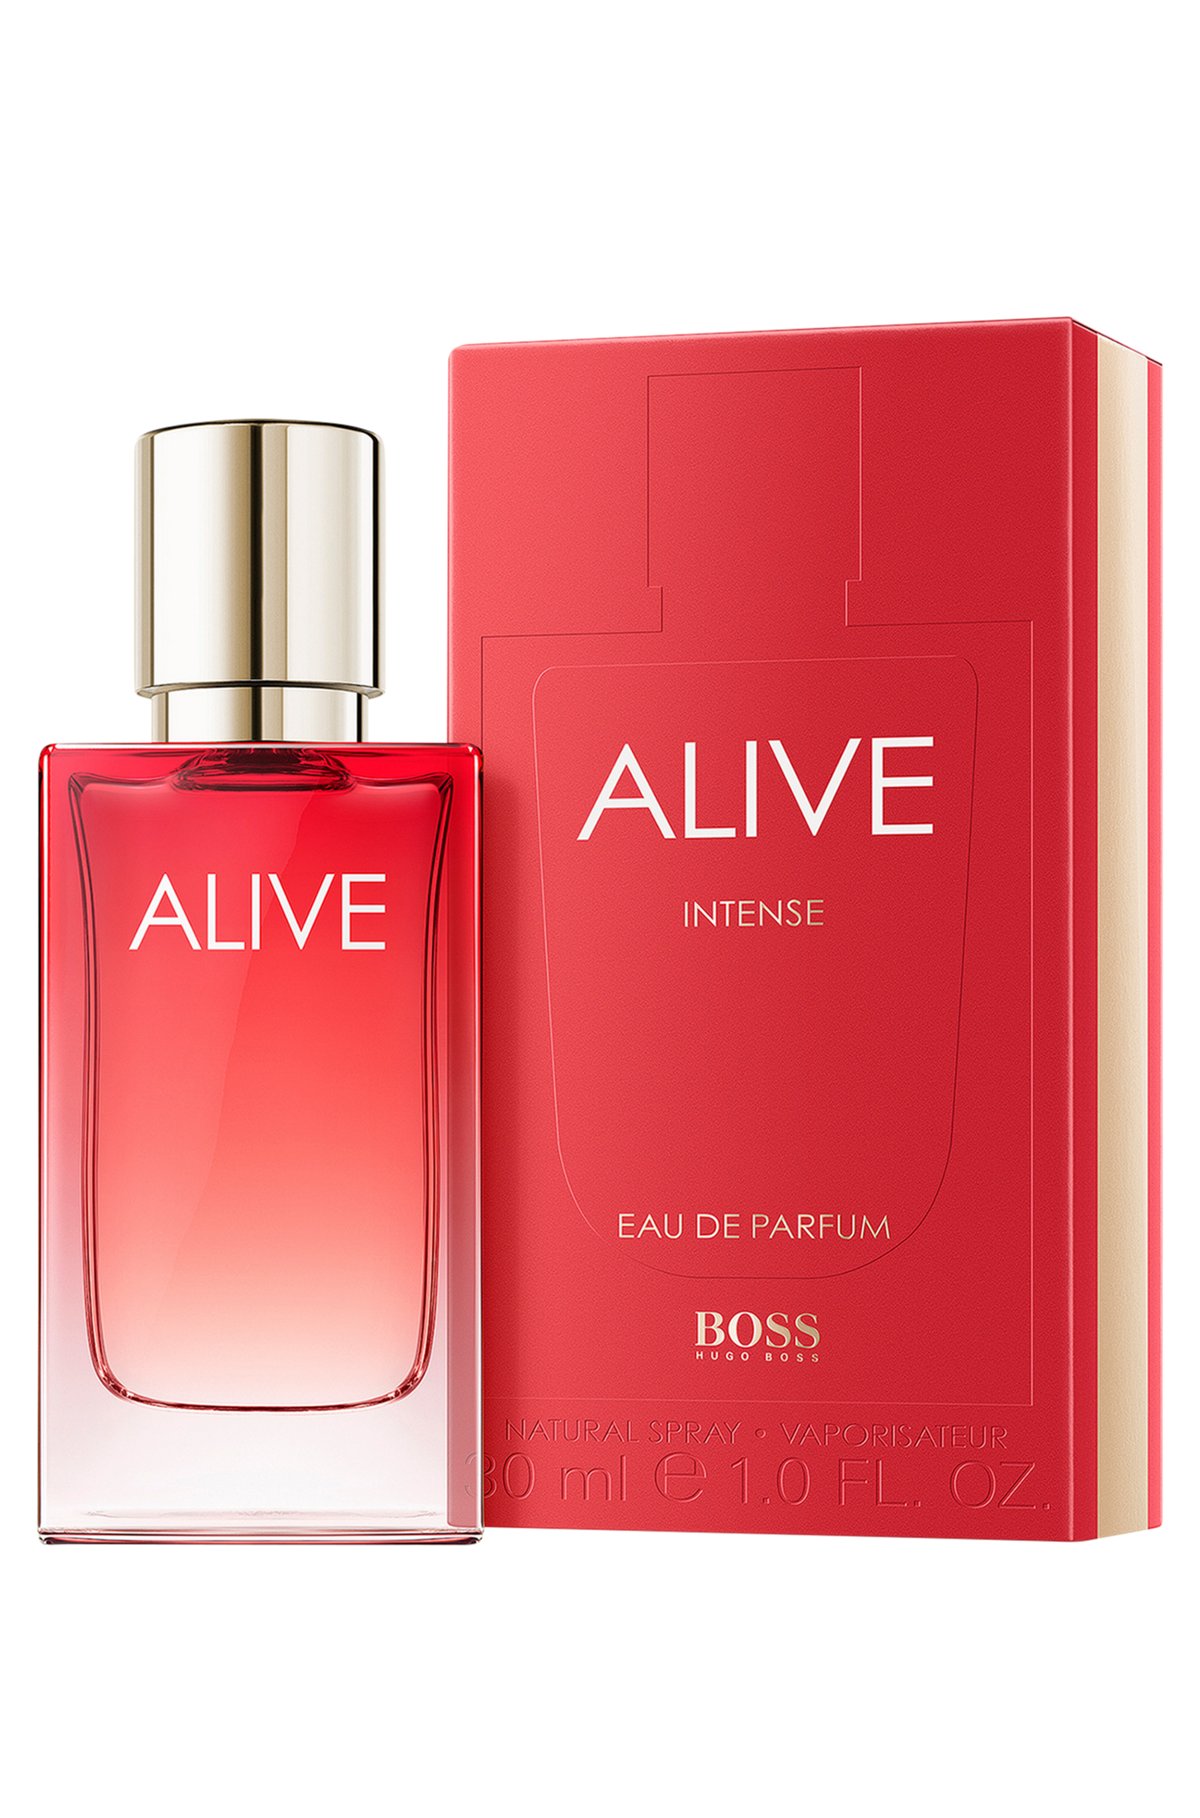 Eau de parfum BOSS Alive Intense 30 ml, Assorted-Pre-Pack